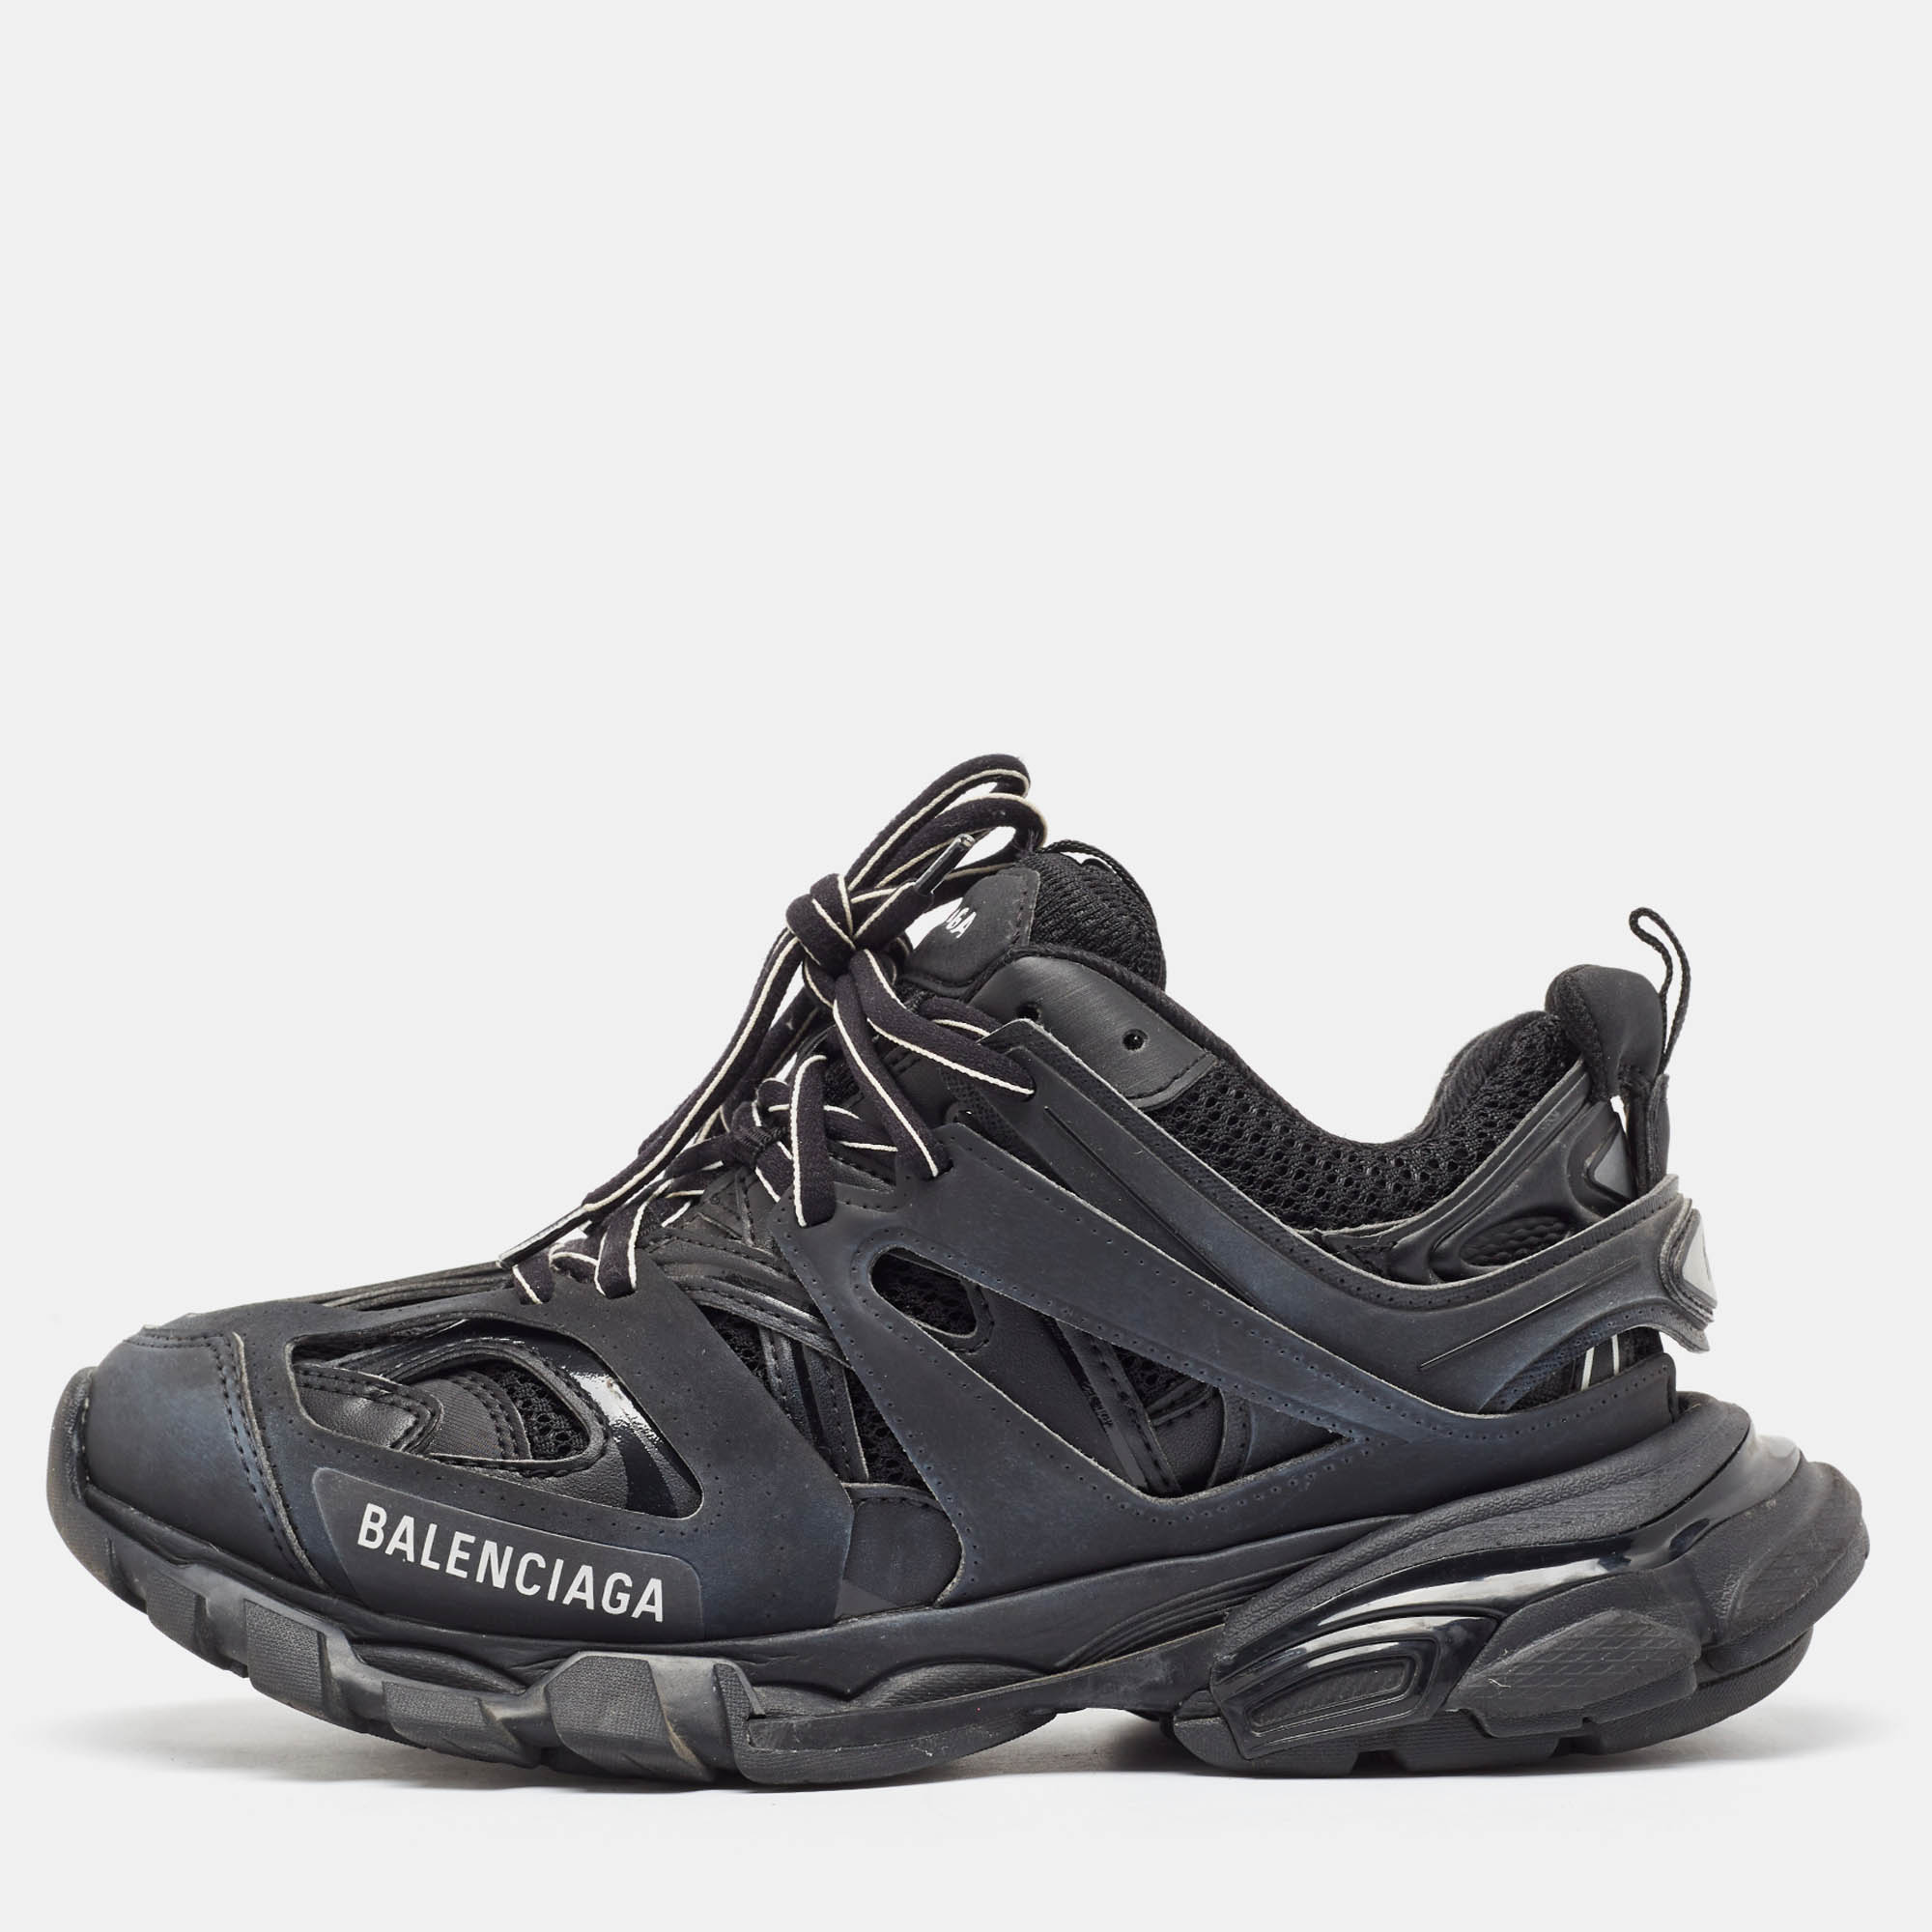 Balenciaga black faux leather mesh track sneakers size 37